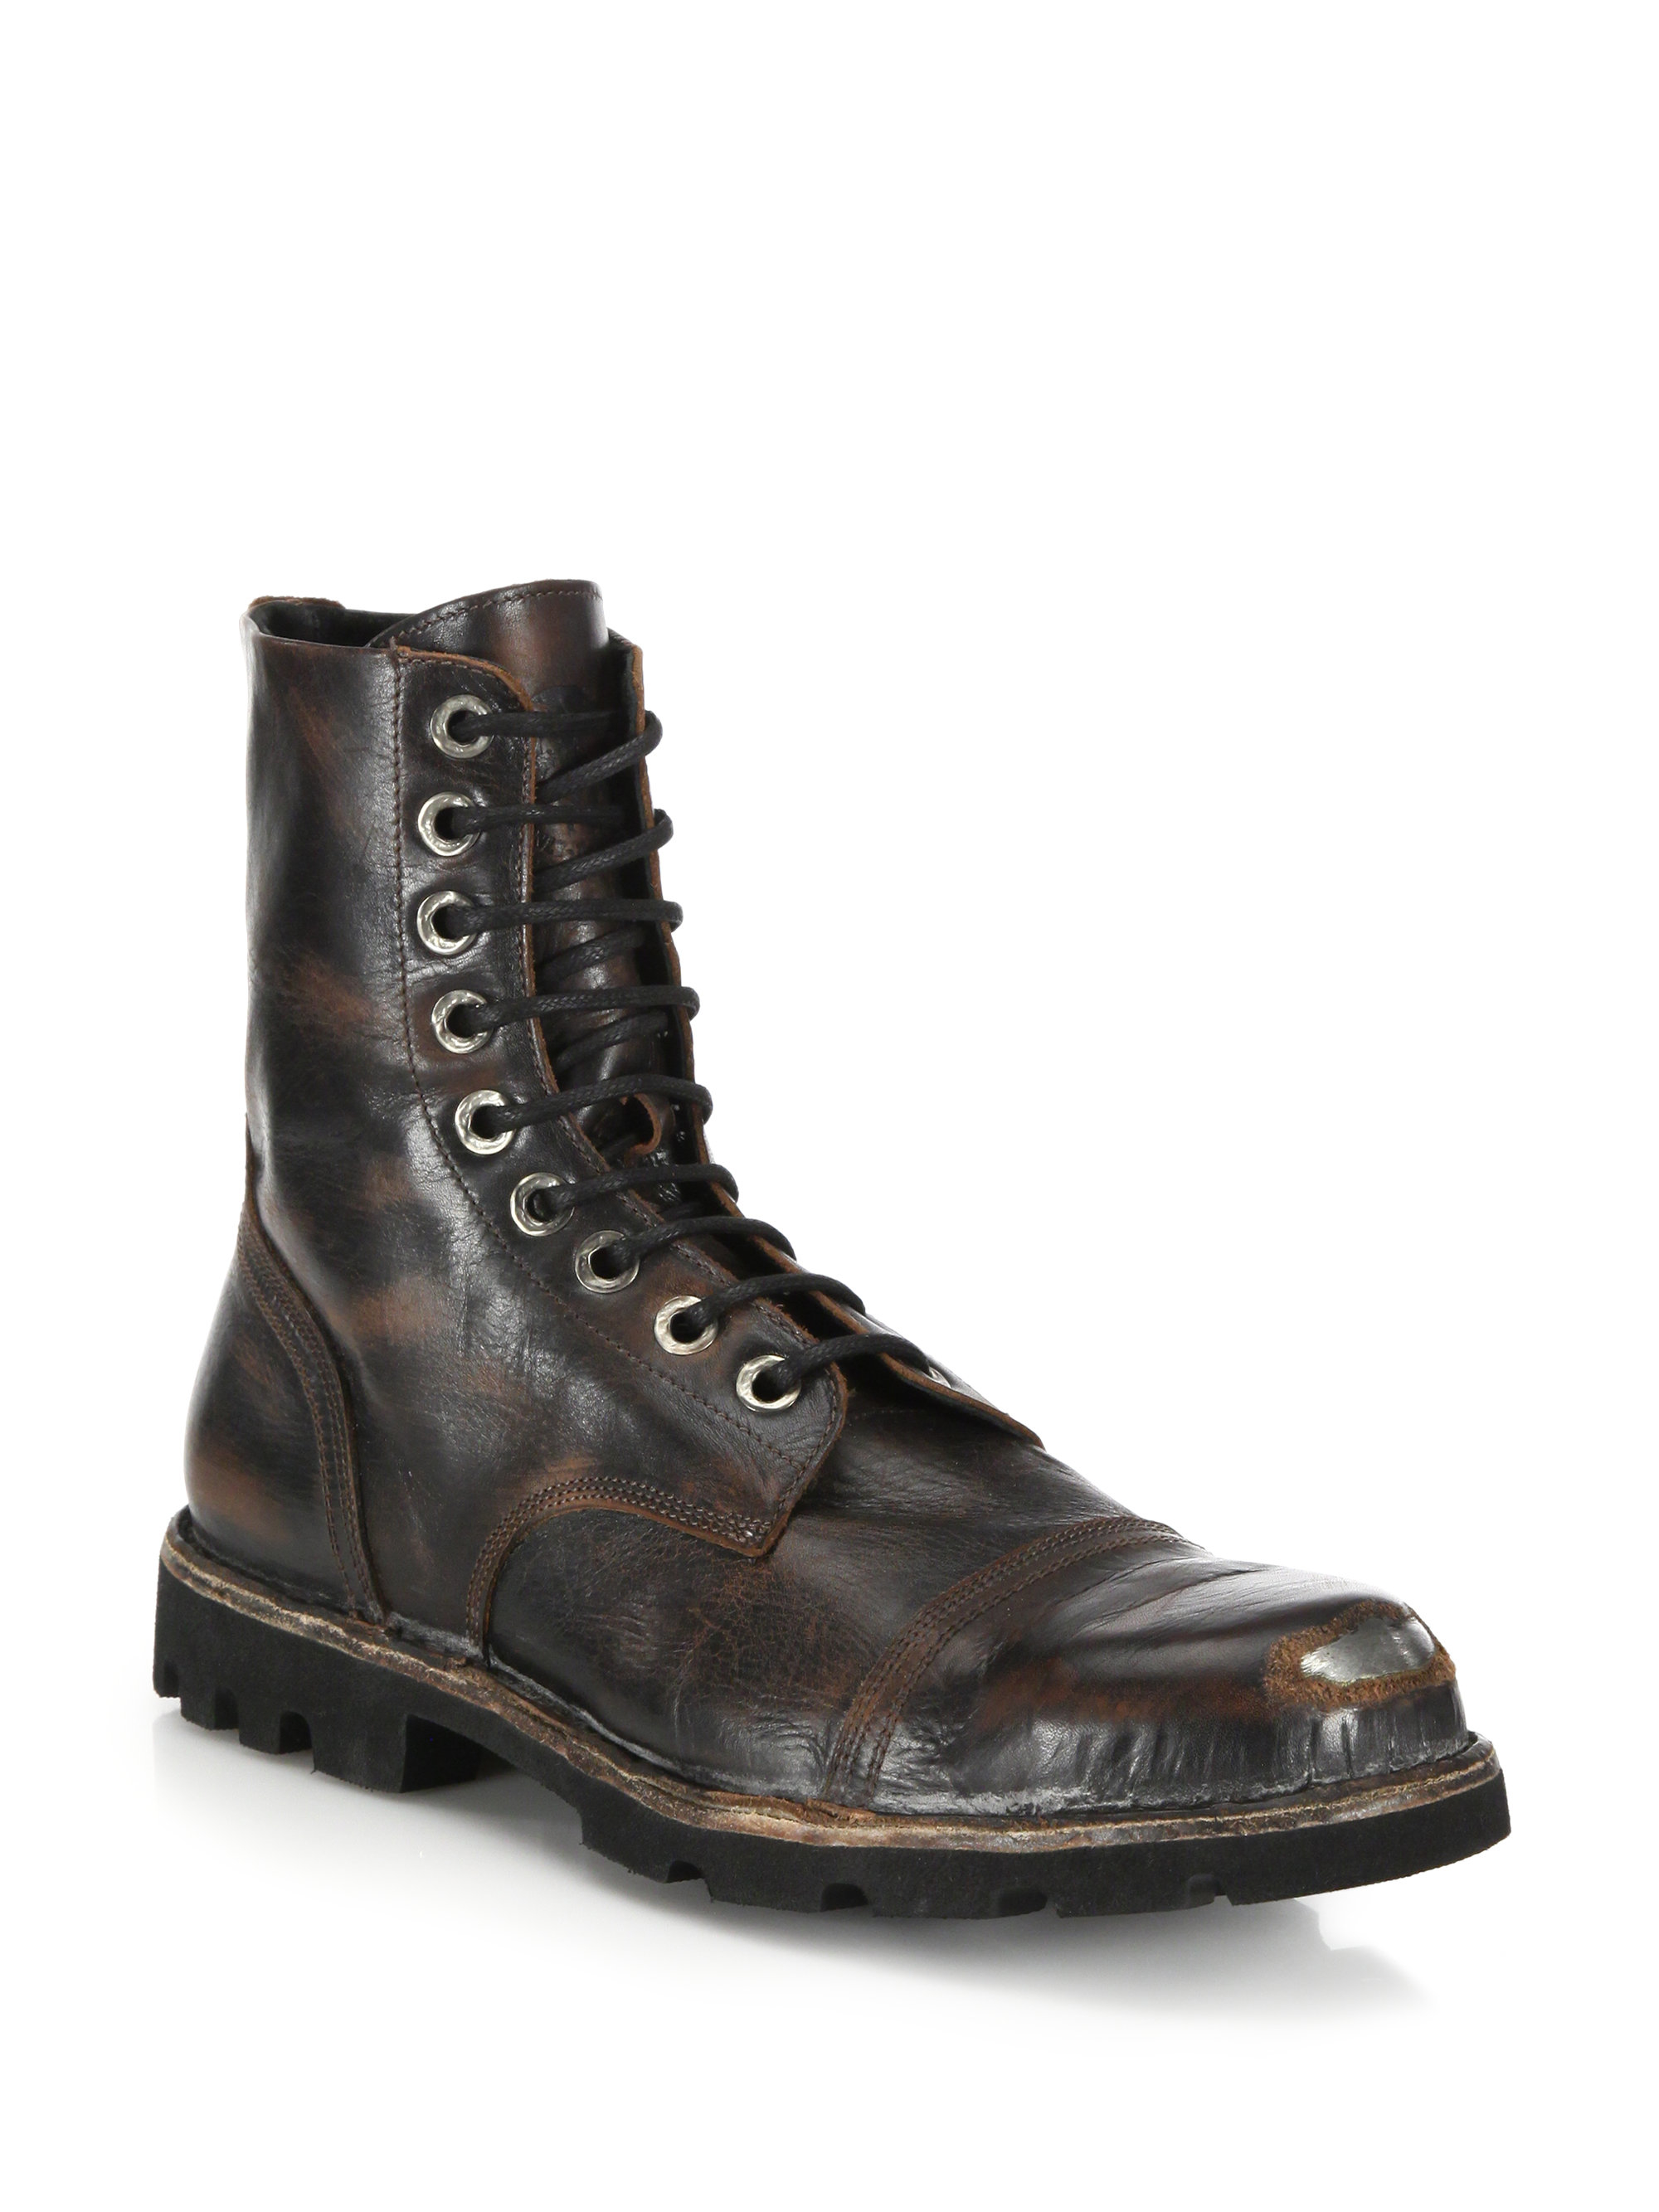 Lyst - Diesel Hardkor Steel-toe Leather Boots in Black for Men